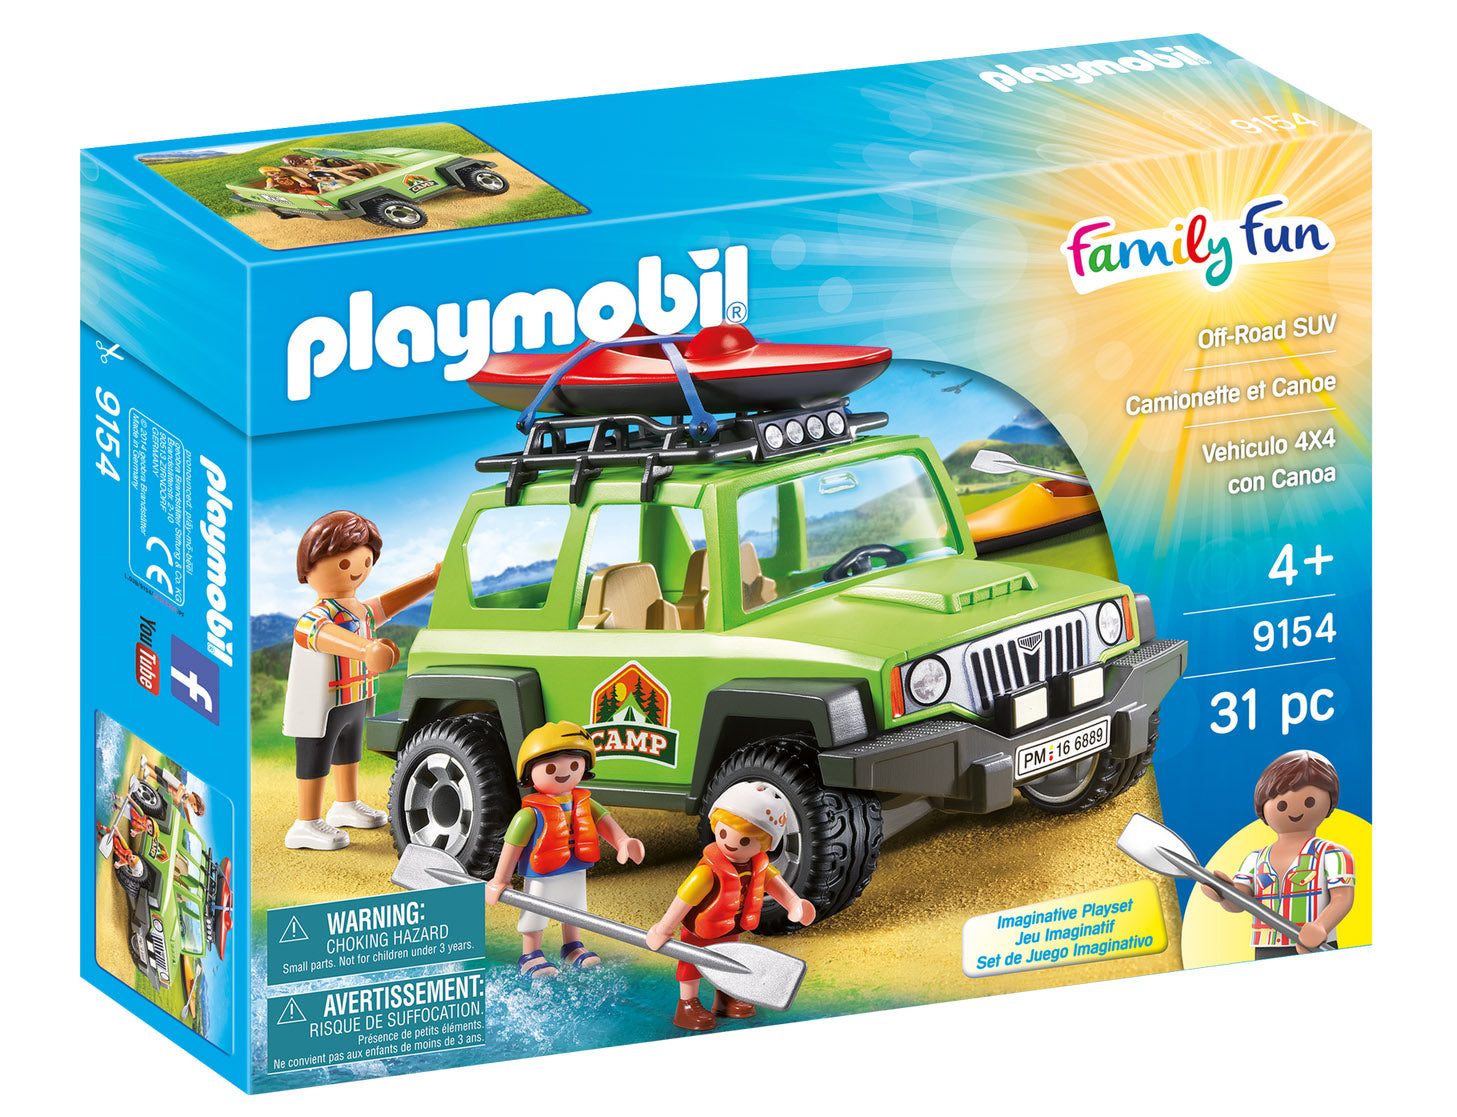 playmobil family set